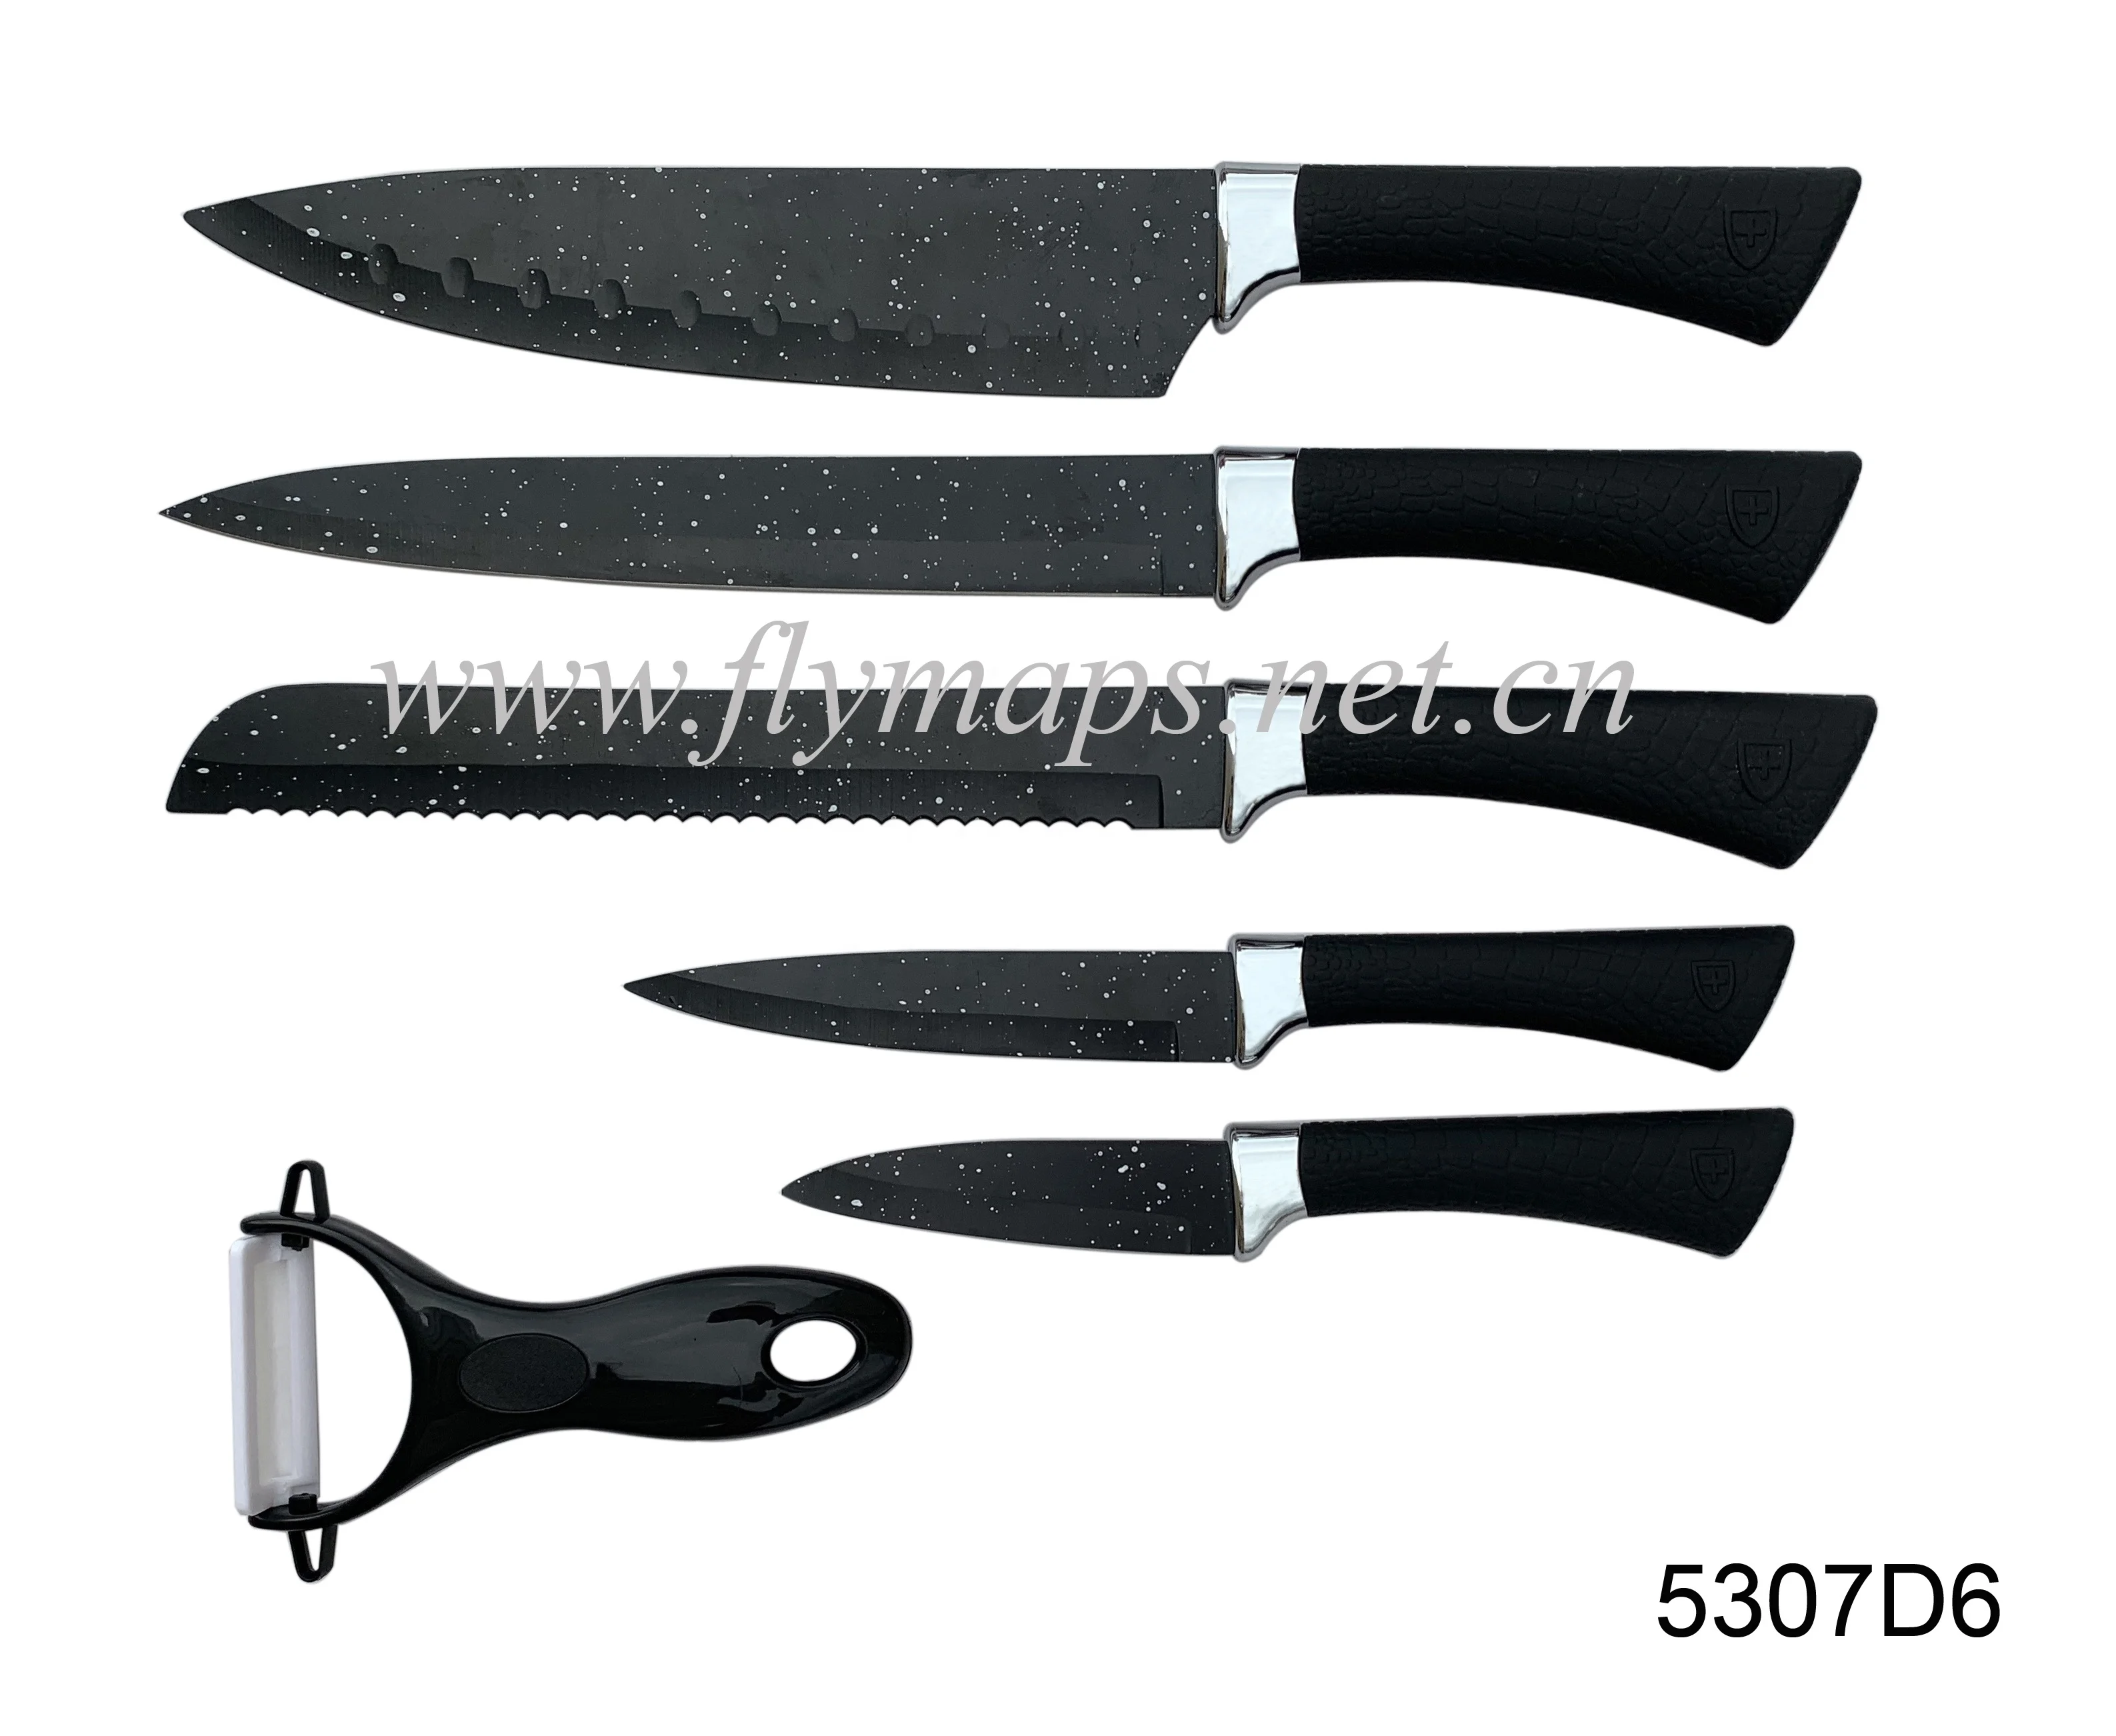 Mr.Cook 3pcs Knife Set - Vvalyou